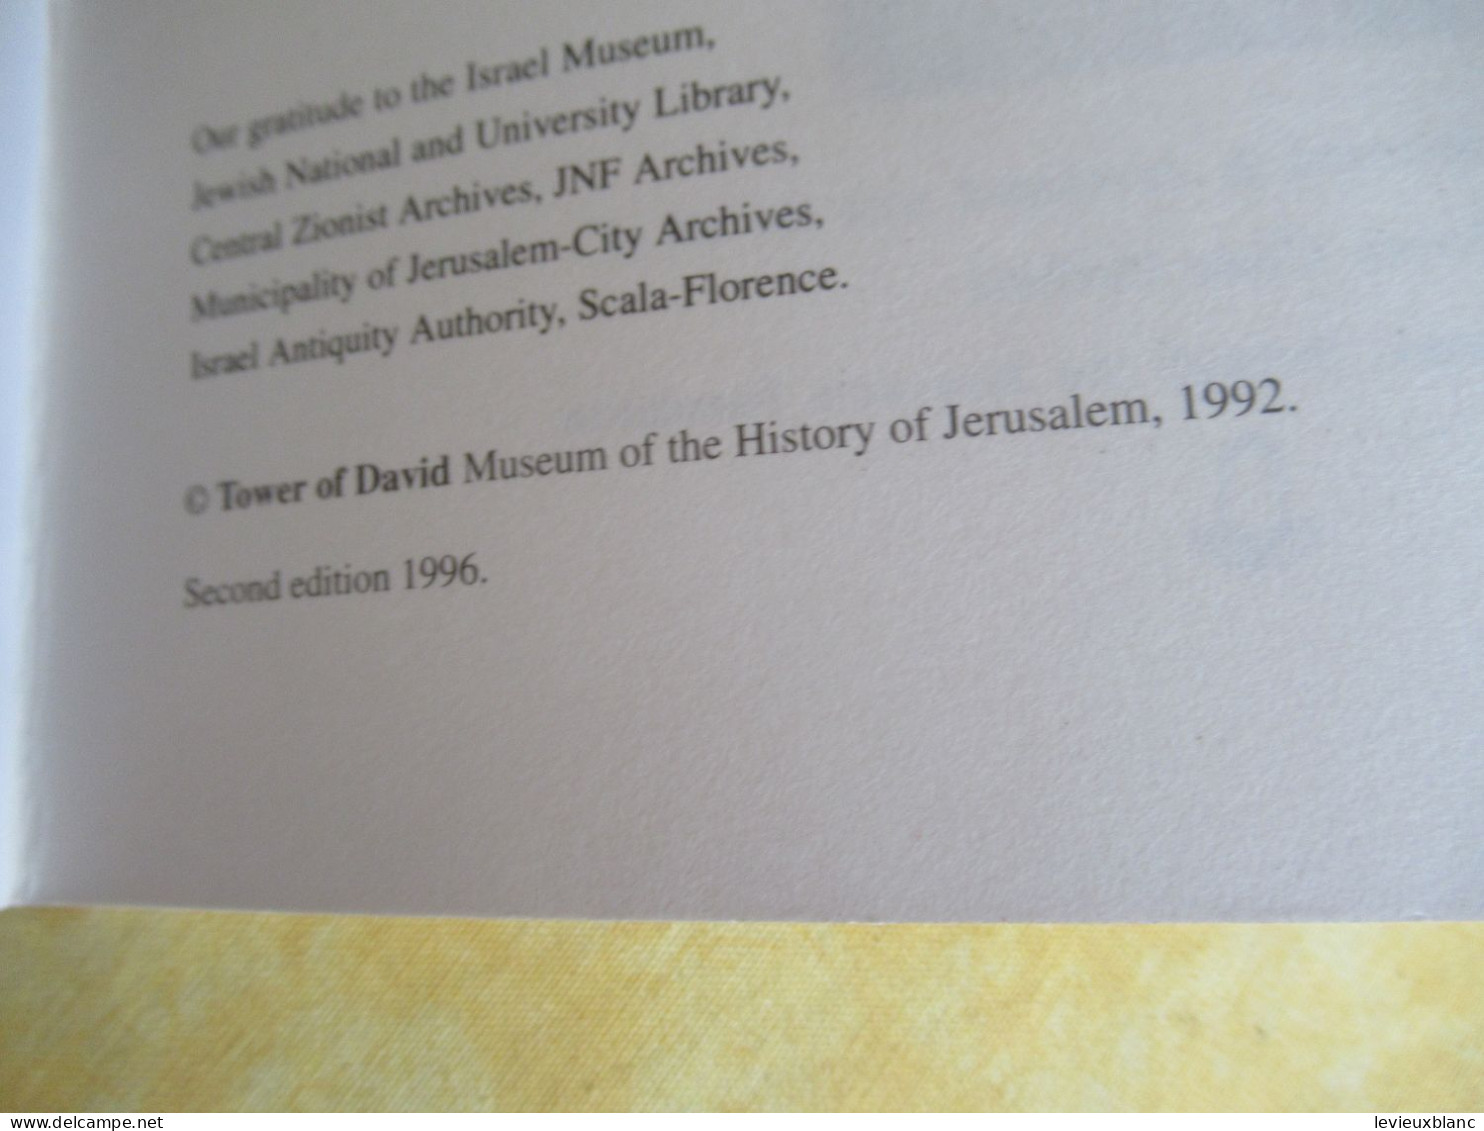 Livret de présentation historique/ The TOWER of DAVID MUSEUM/ JERUSALEM/Where Jerusalem Begins/ISRAEL/1996      PCG524